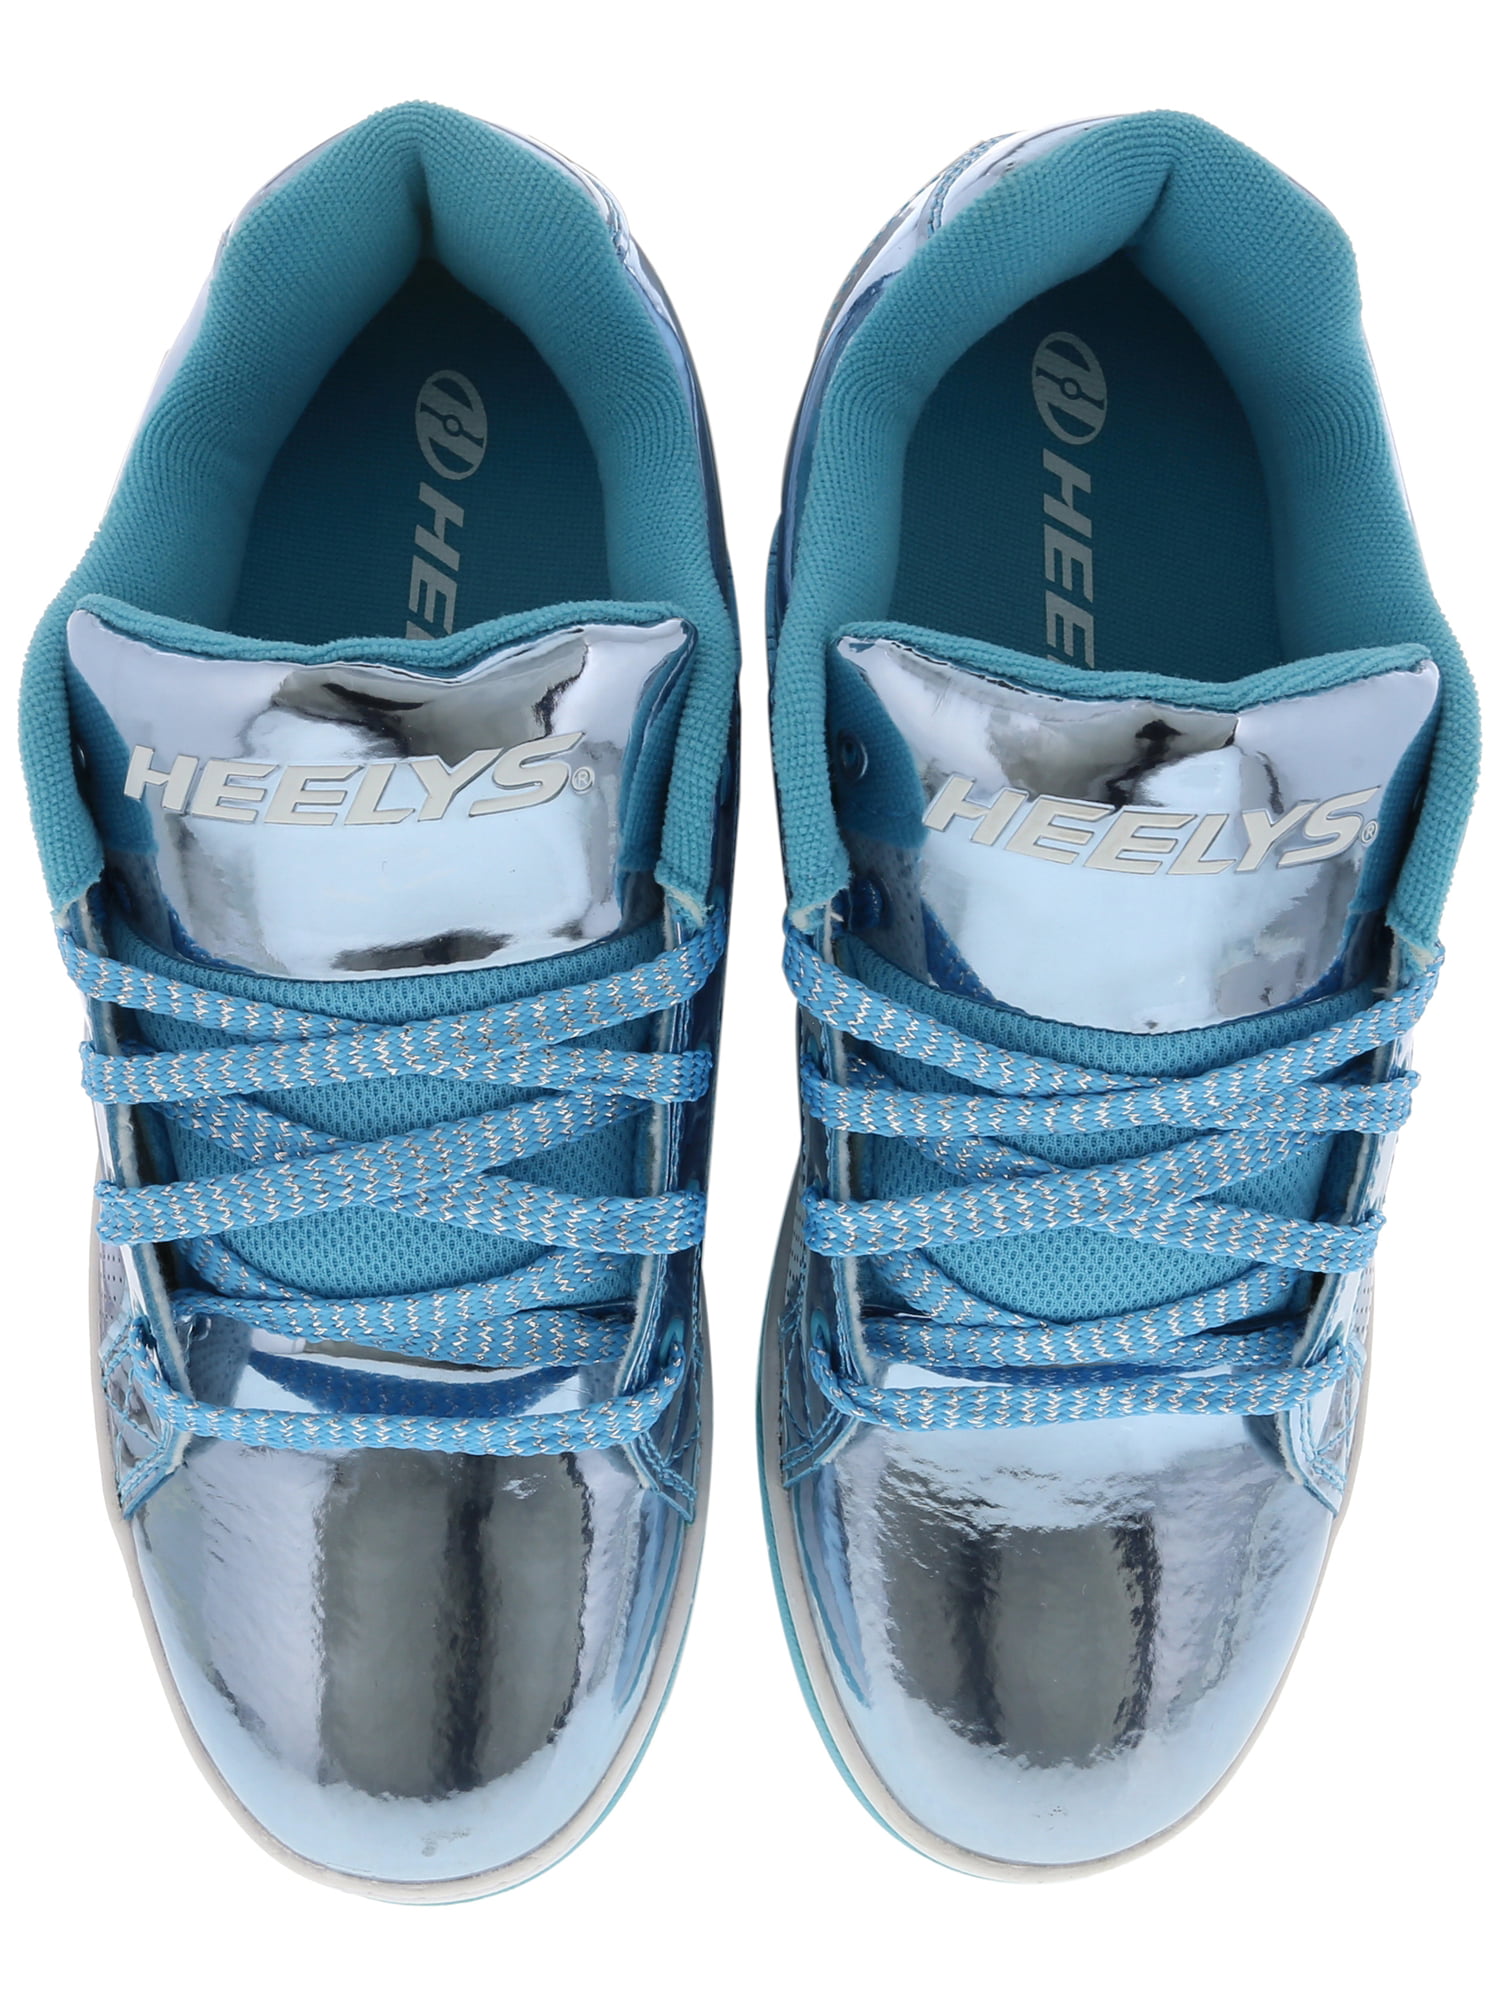 blue heelys shoes